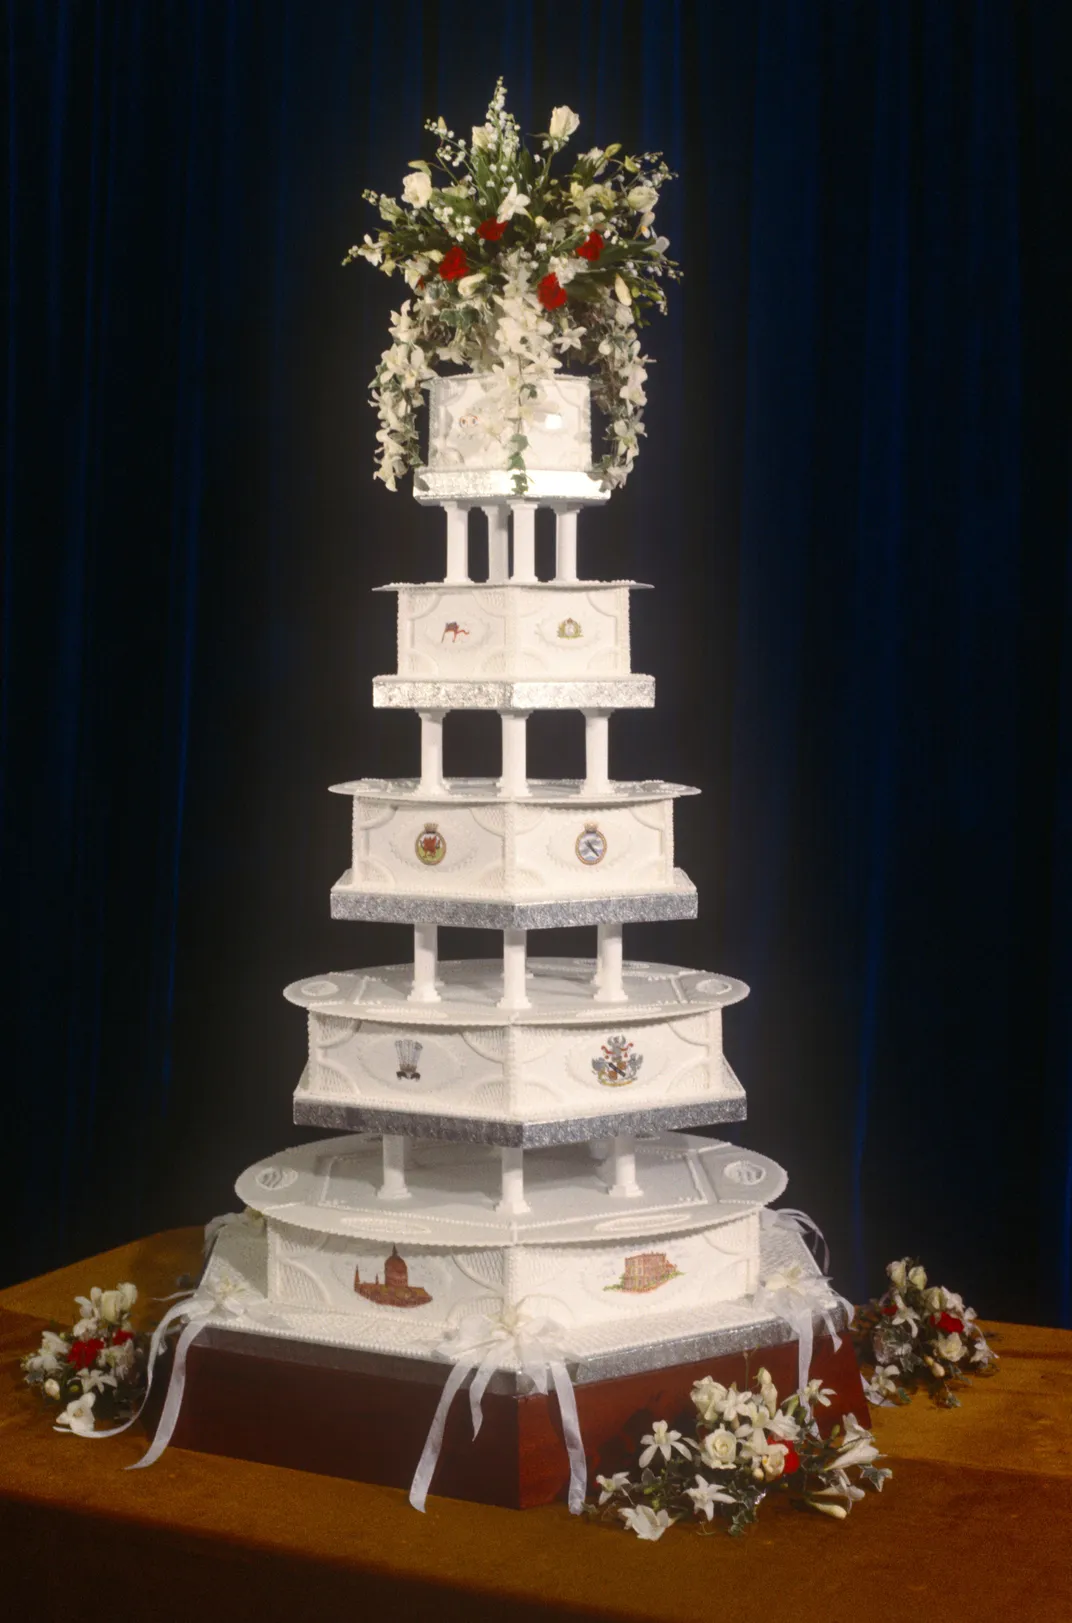 Diana and Charles wedding cake